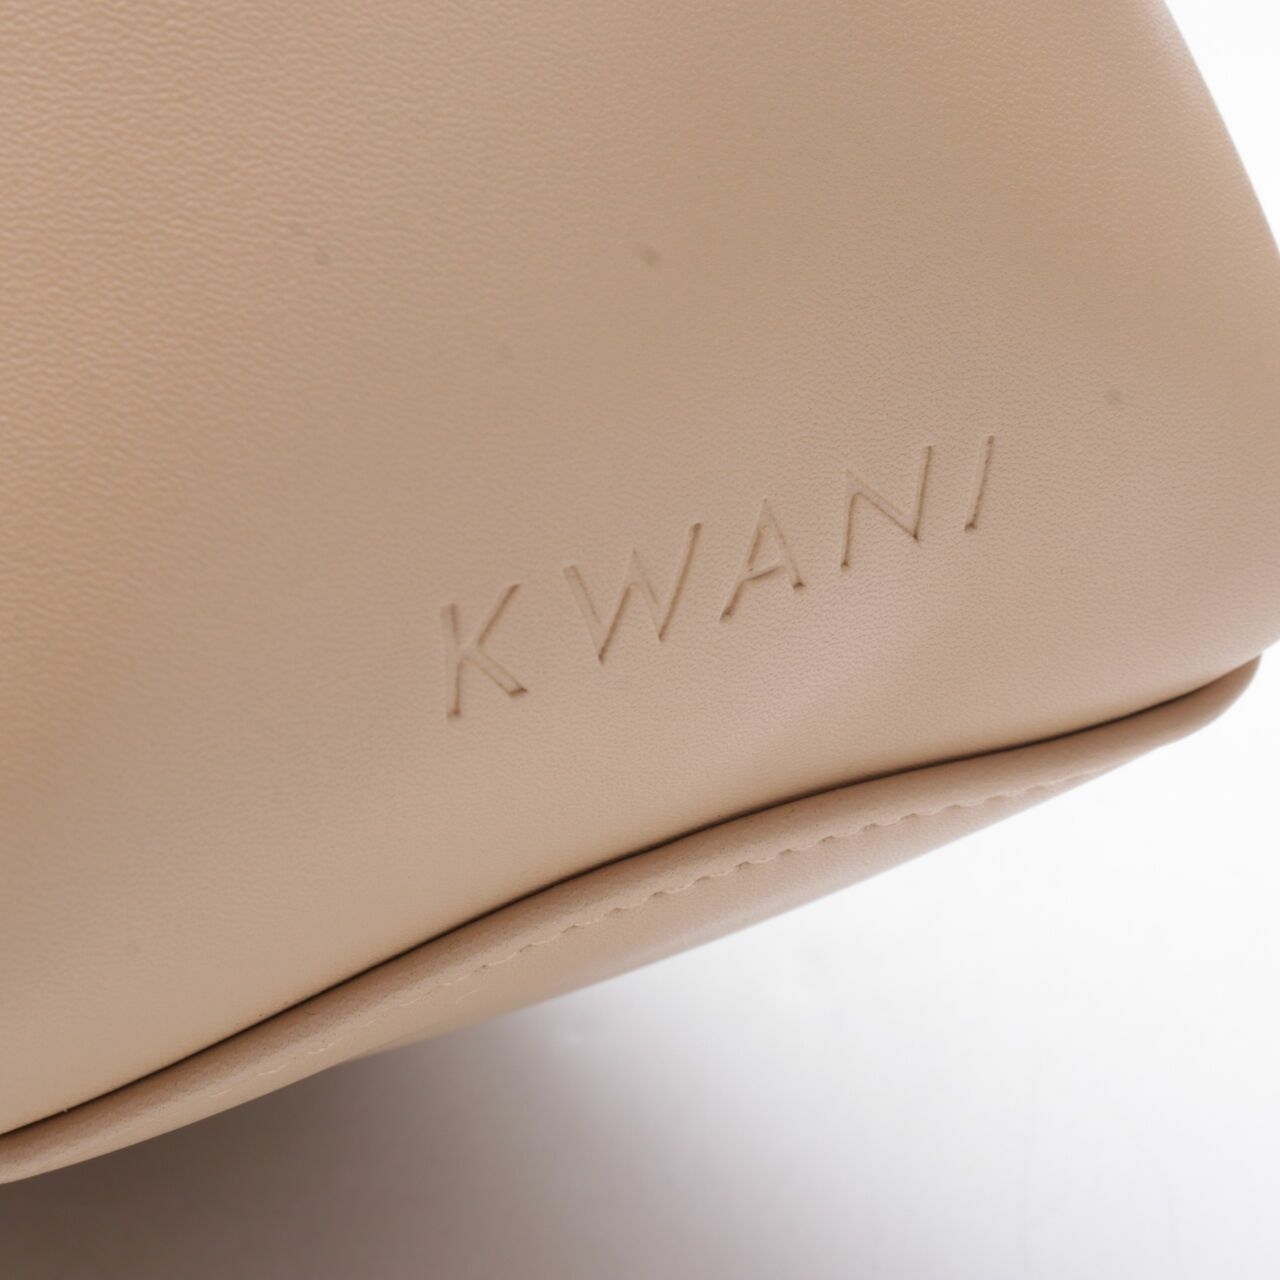 Kwani Nude Leather Handbag